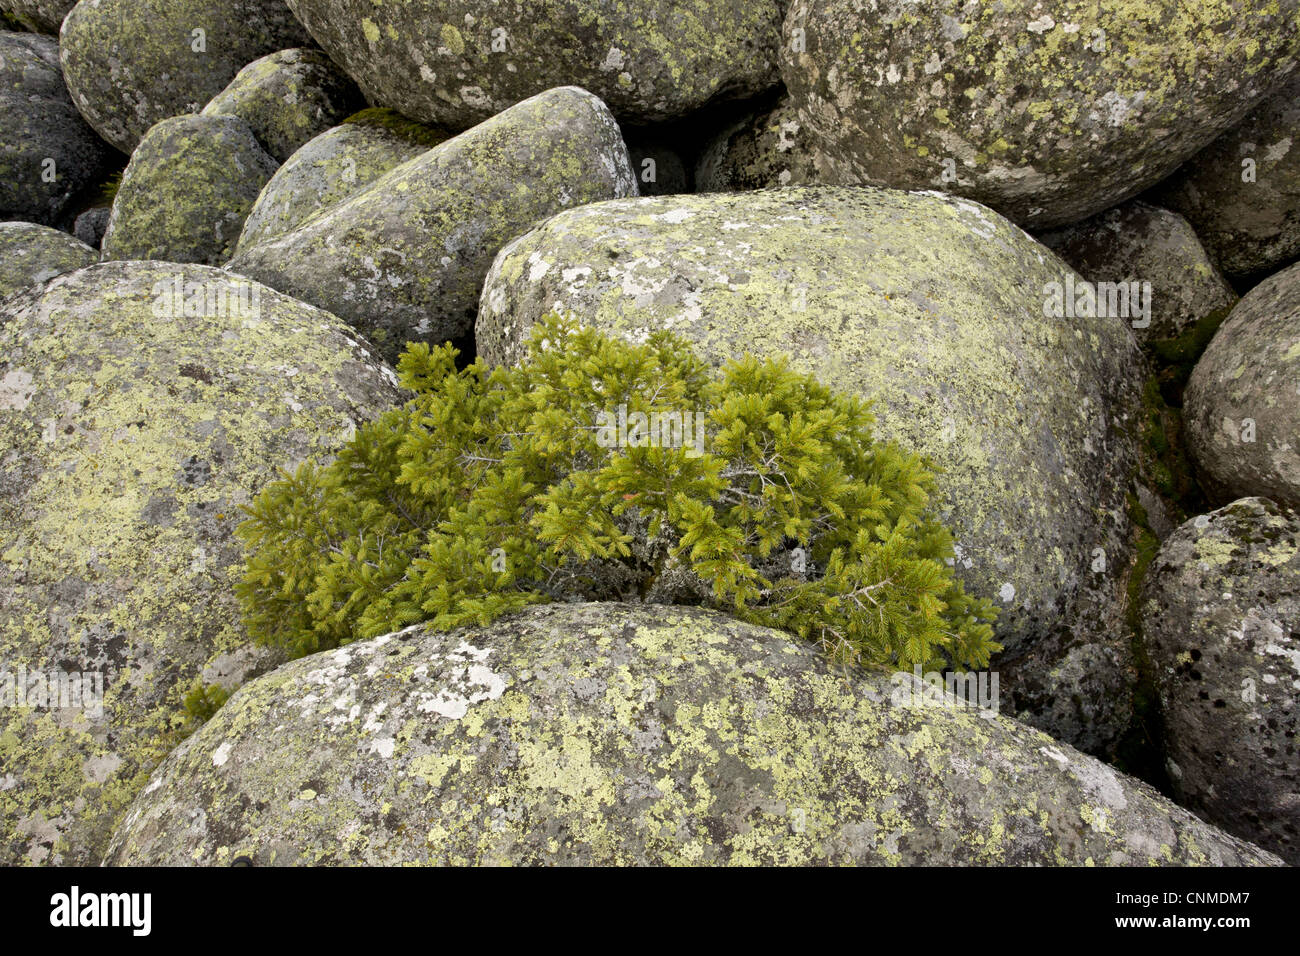 Norway Spruce Picea abies dwarfed habit growing amongst granite boulders 'stone run' peculiar geomorphological phenomenon Stock Photo